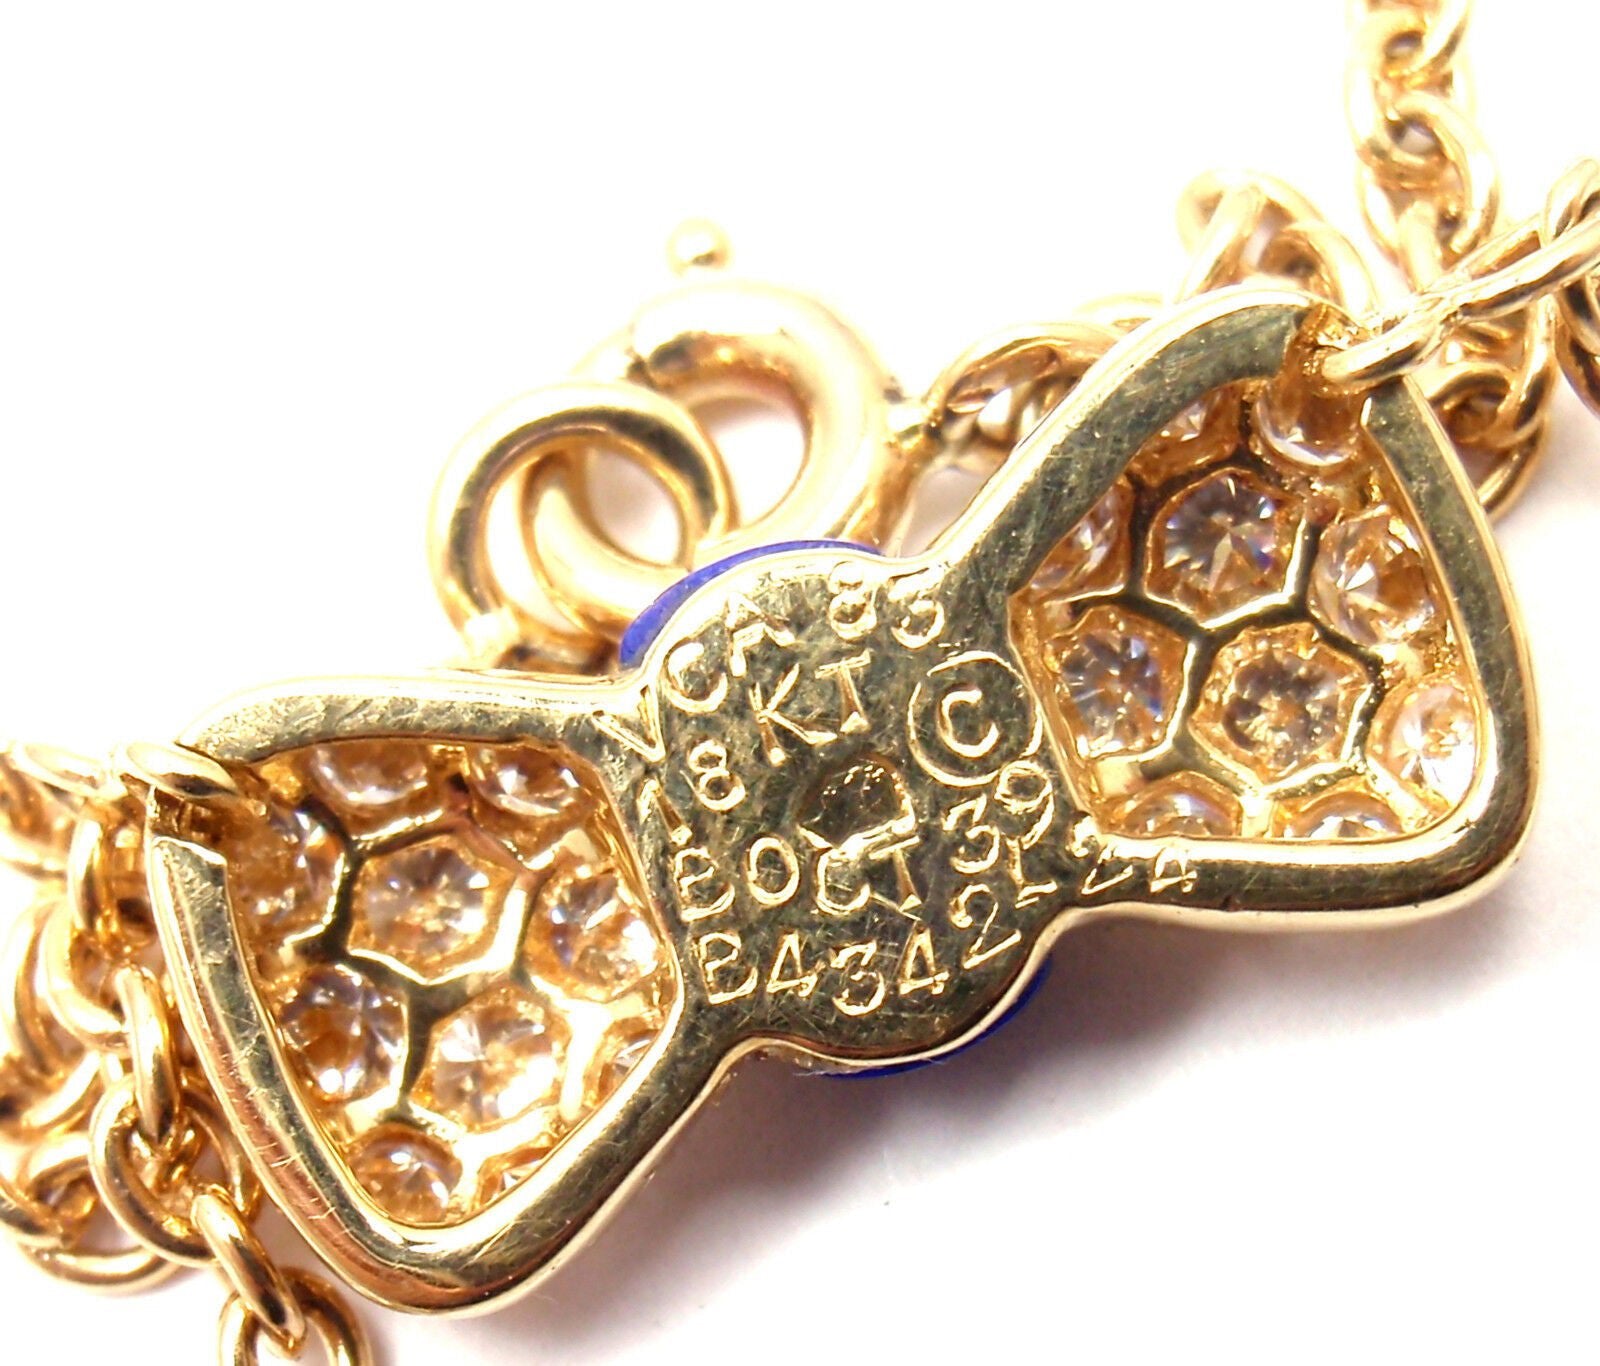 Van Cleef & Arpels Jewelry & Watches:Fine Jewelry:Necklaces & Pendants Authentic! Van Cleef & Arpels 18k Yellow Gold Diamond Lapis Bow Pendant Necklace